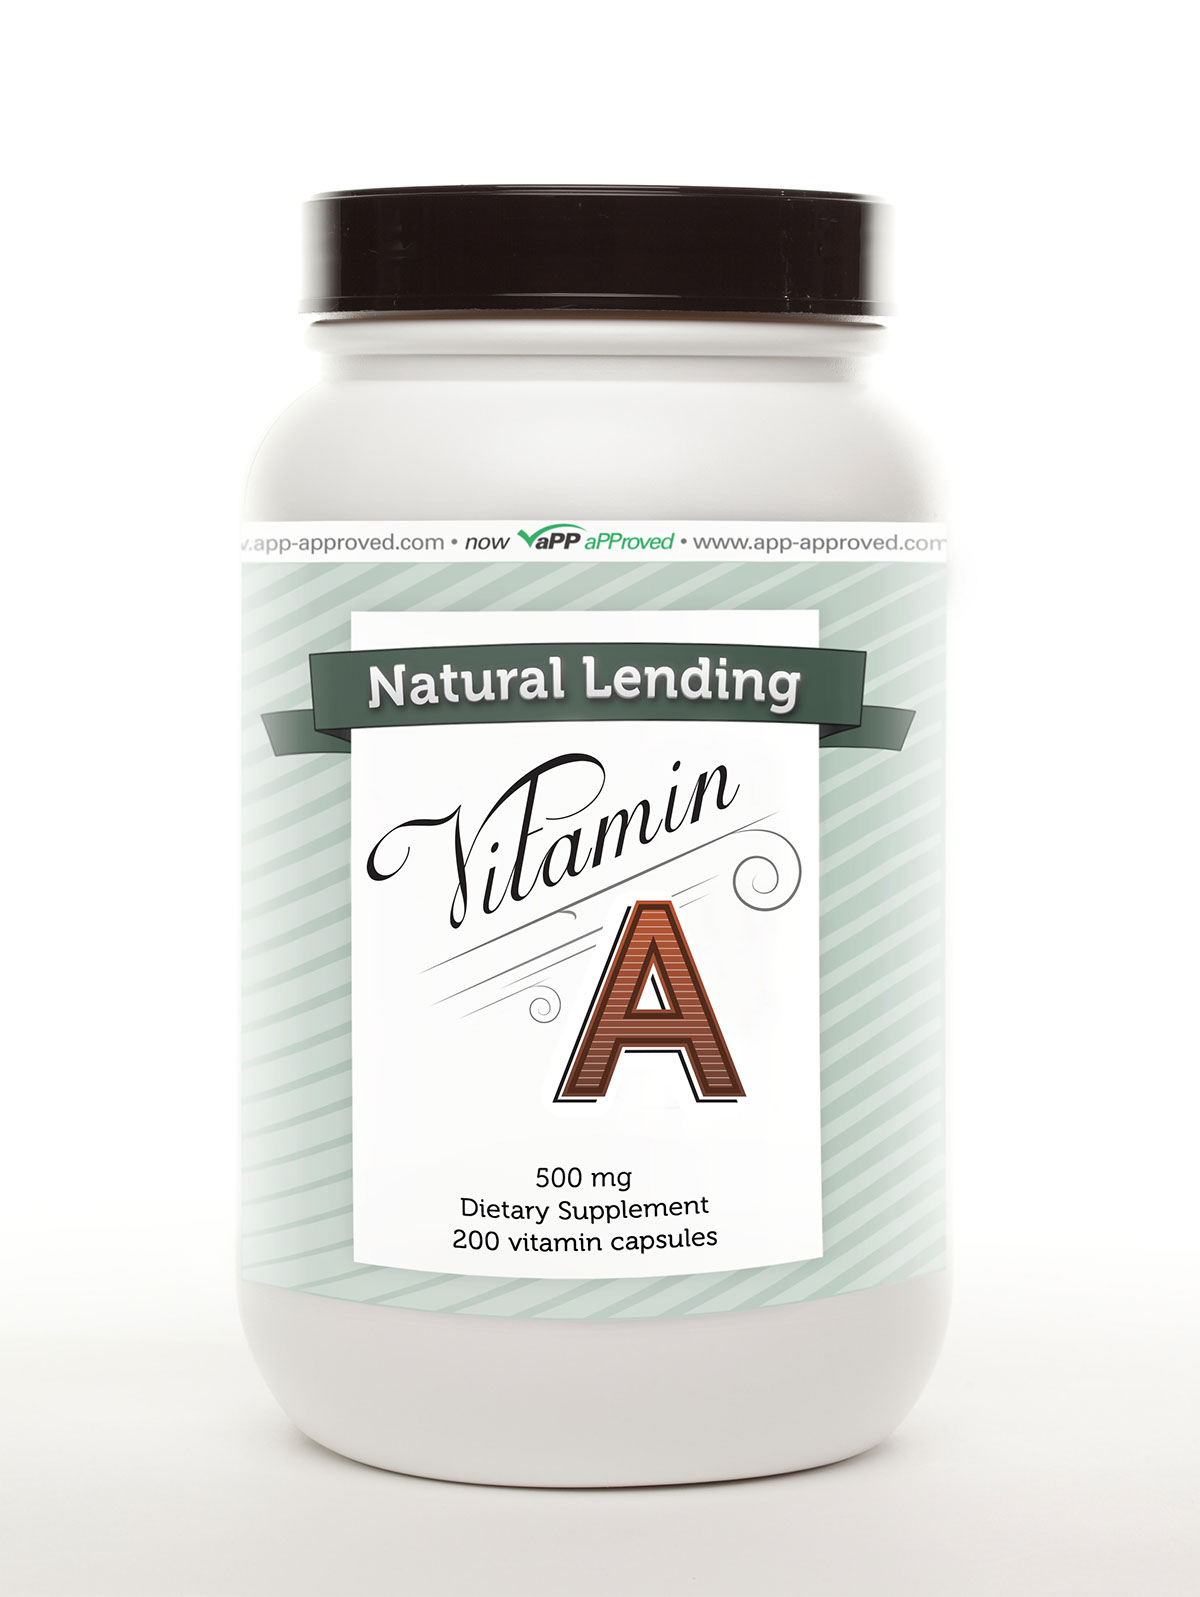 Natural Lending lend lending natural pill pill bottle vitamin vitamin supplement vitamin supplements